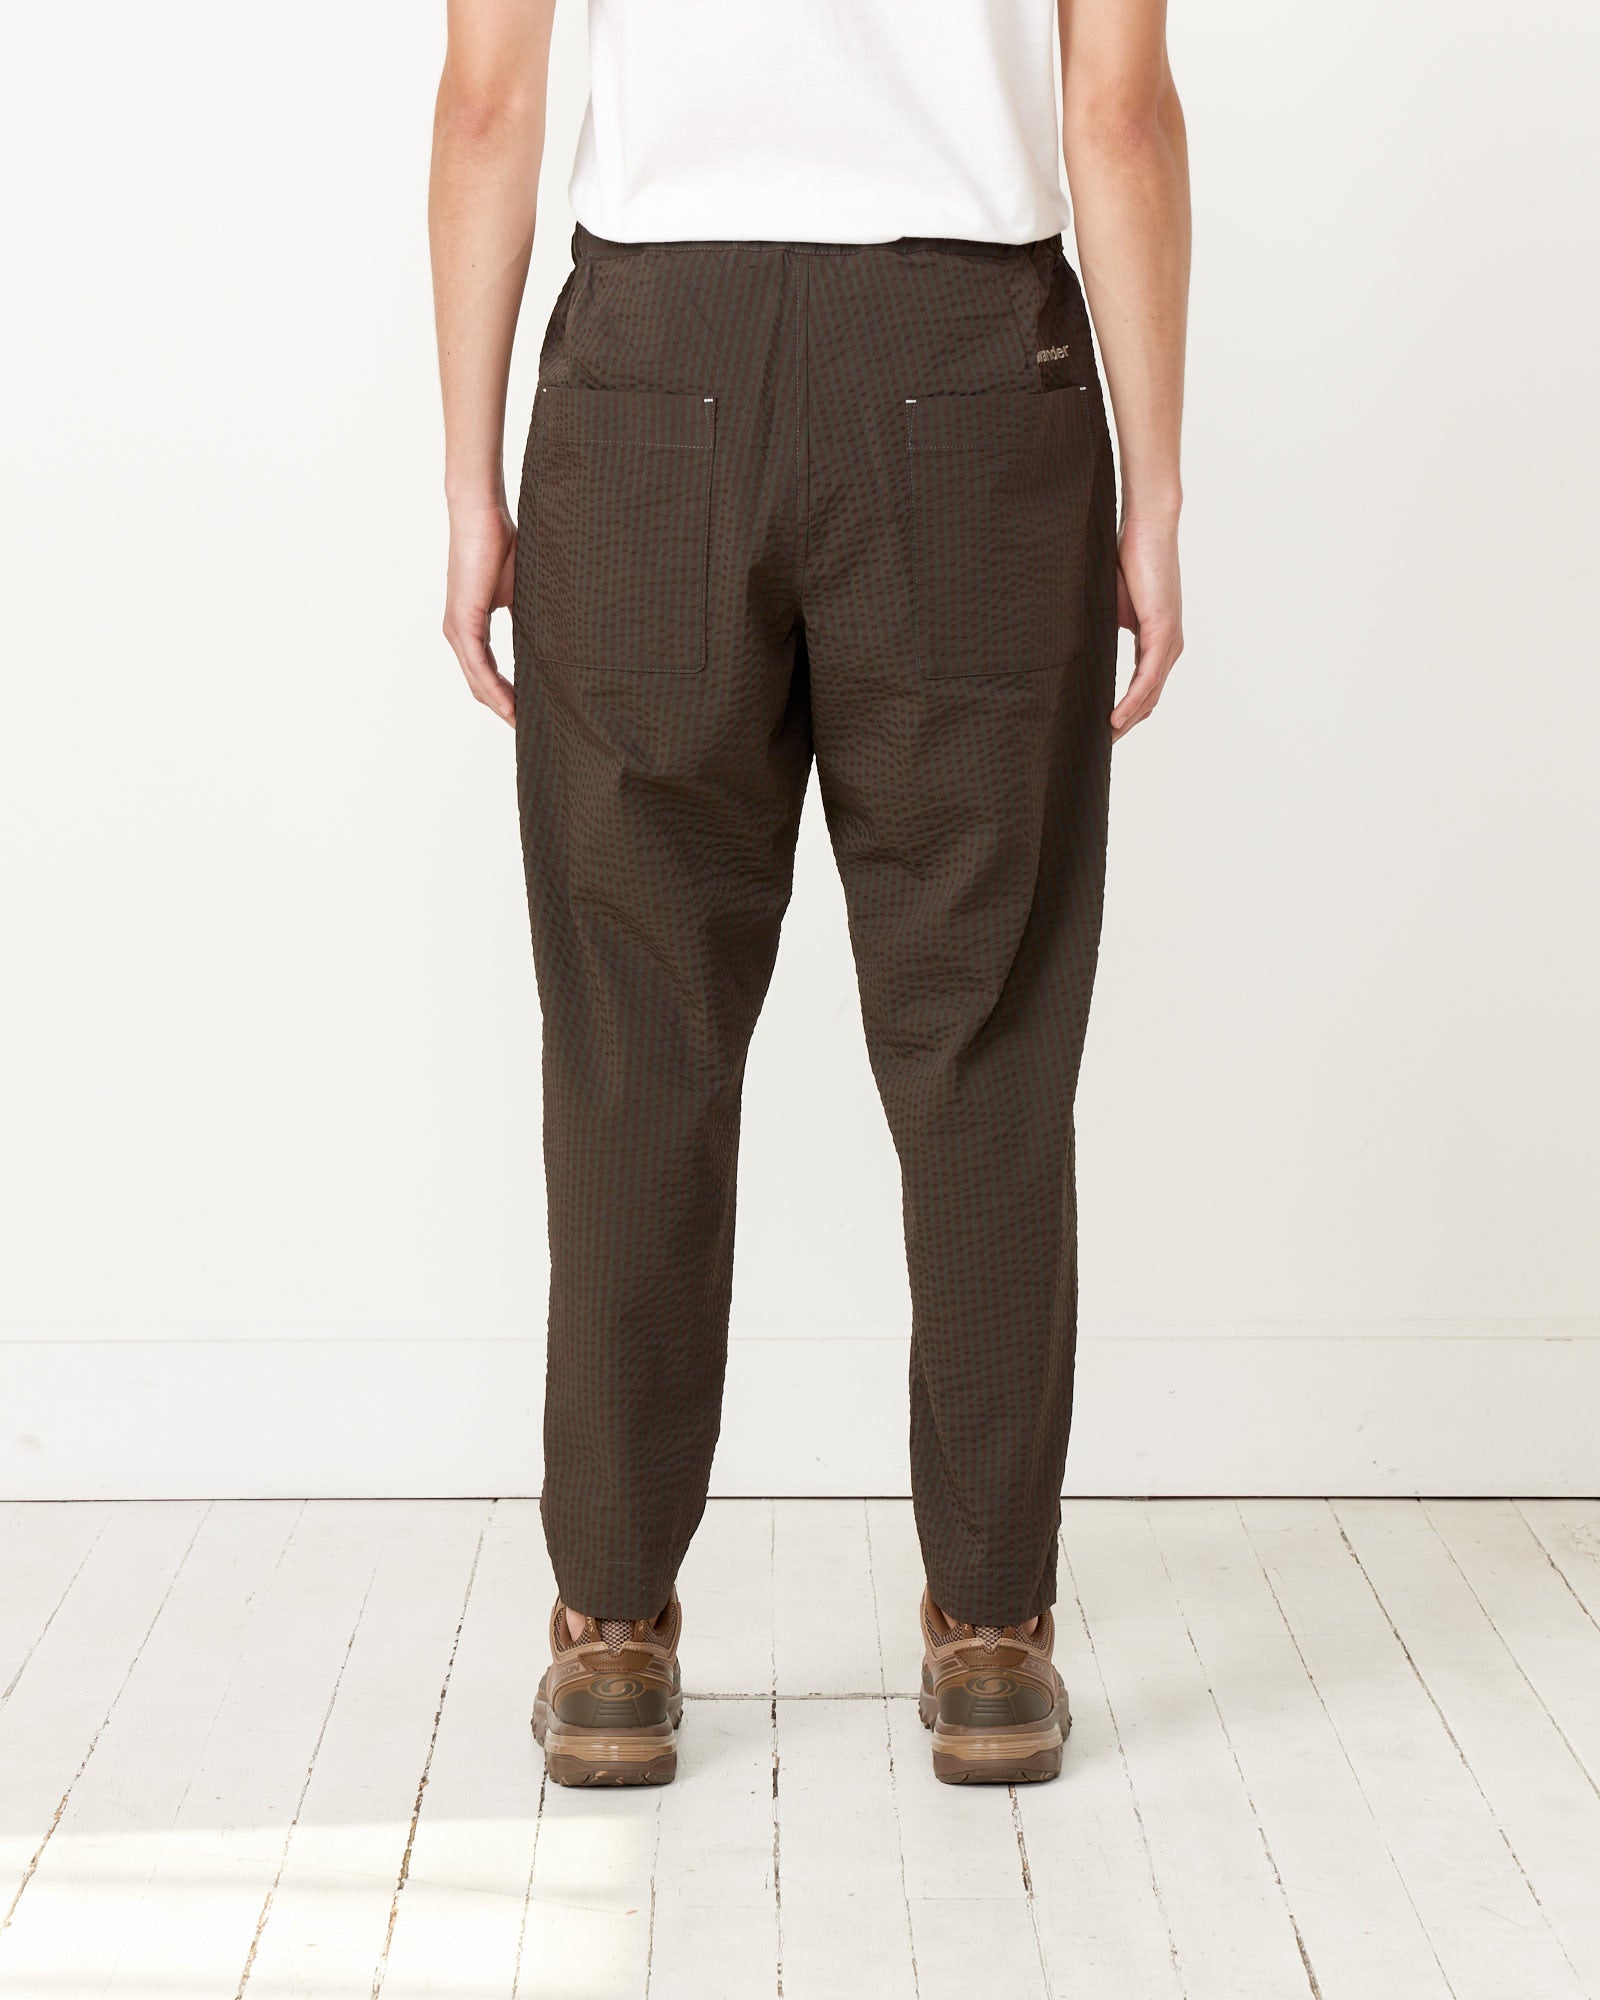 Dry Soft Seersucker Pants in Khaki